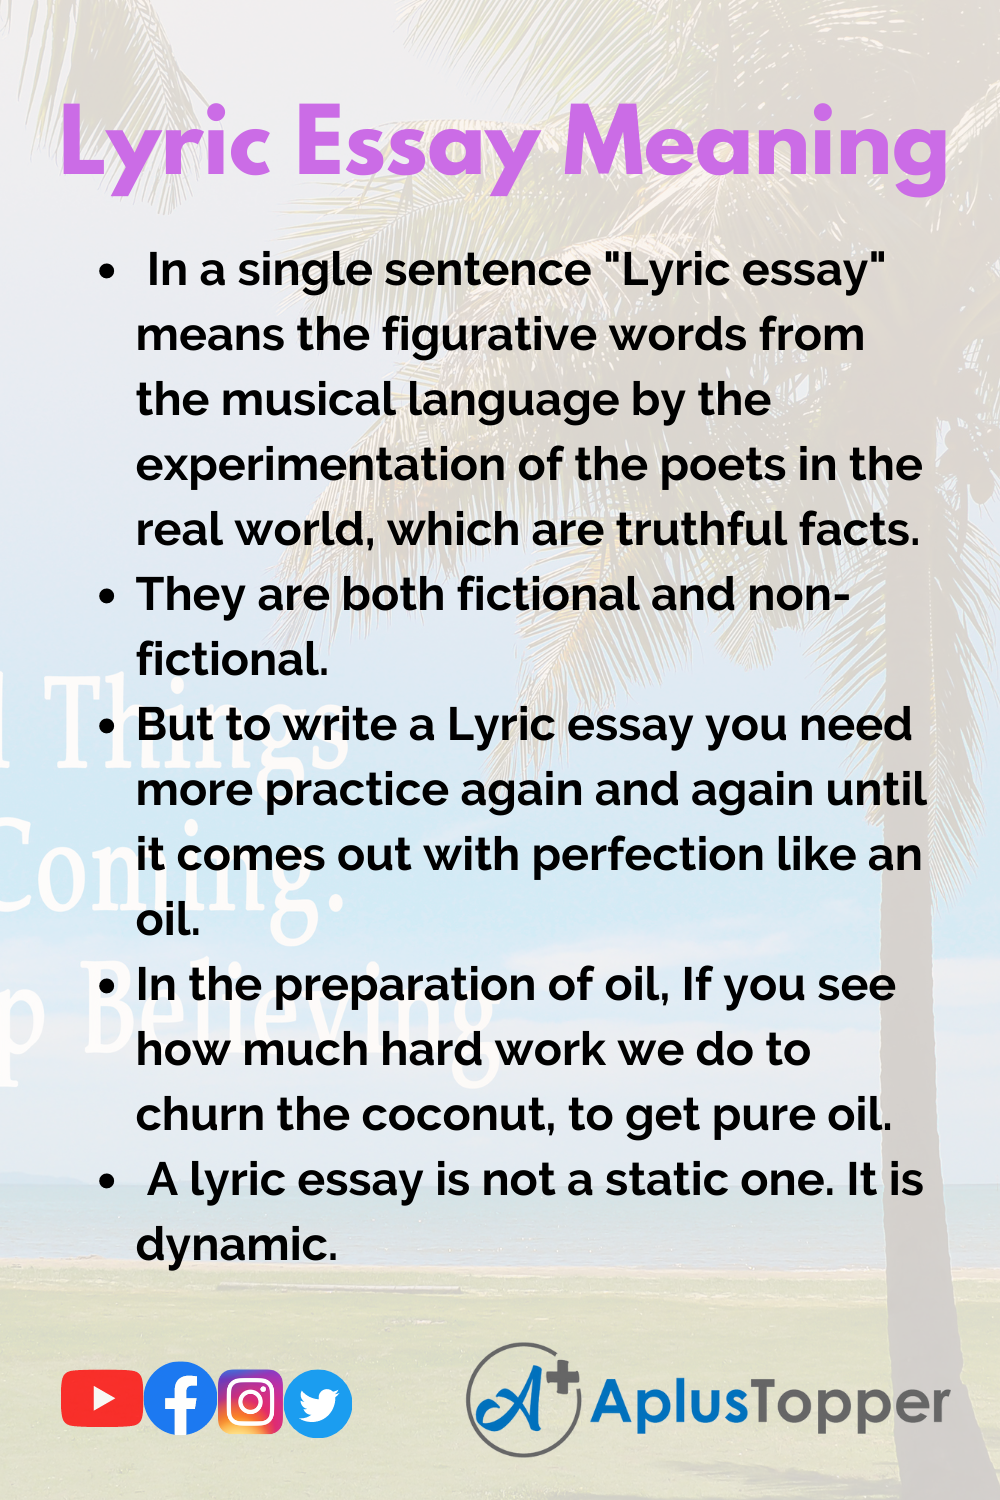 the lyric essay